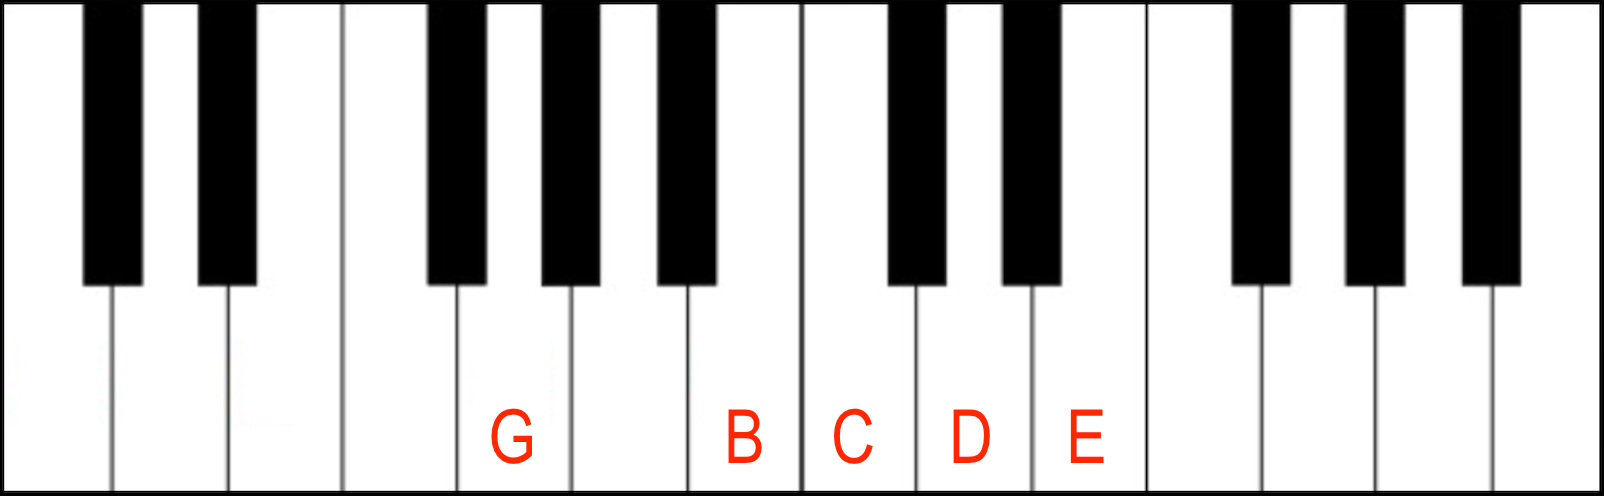 Jazz Piano Chords:: Major 9th Jazz Piano Chord in 2nd inversion